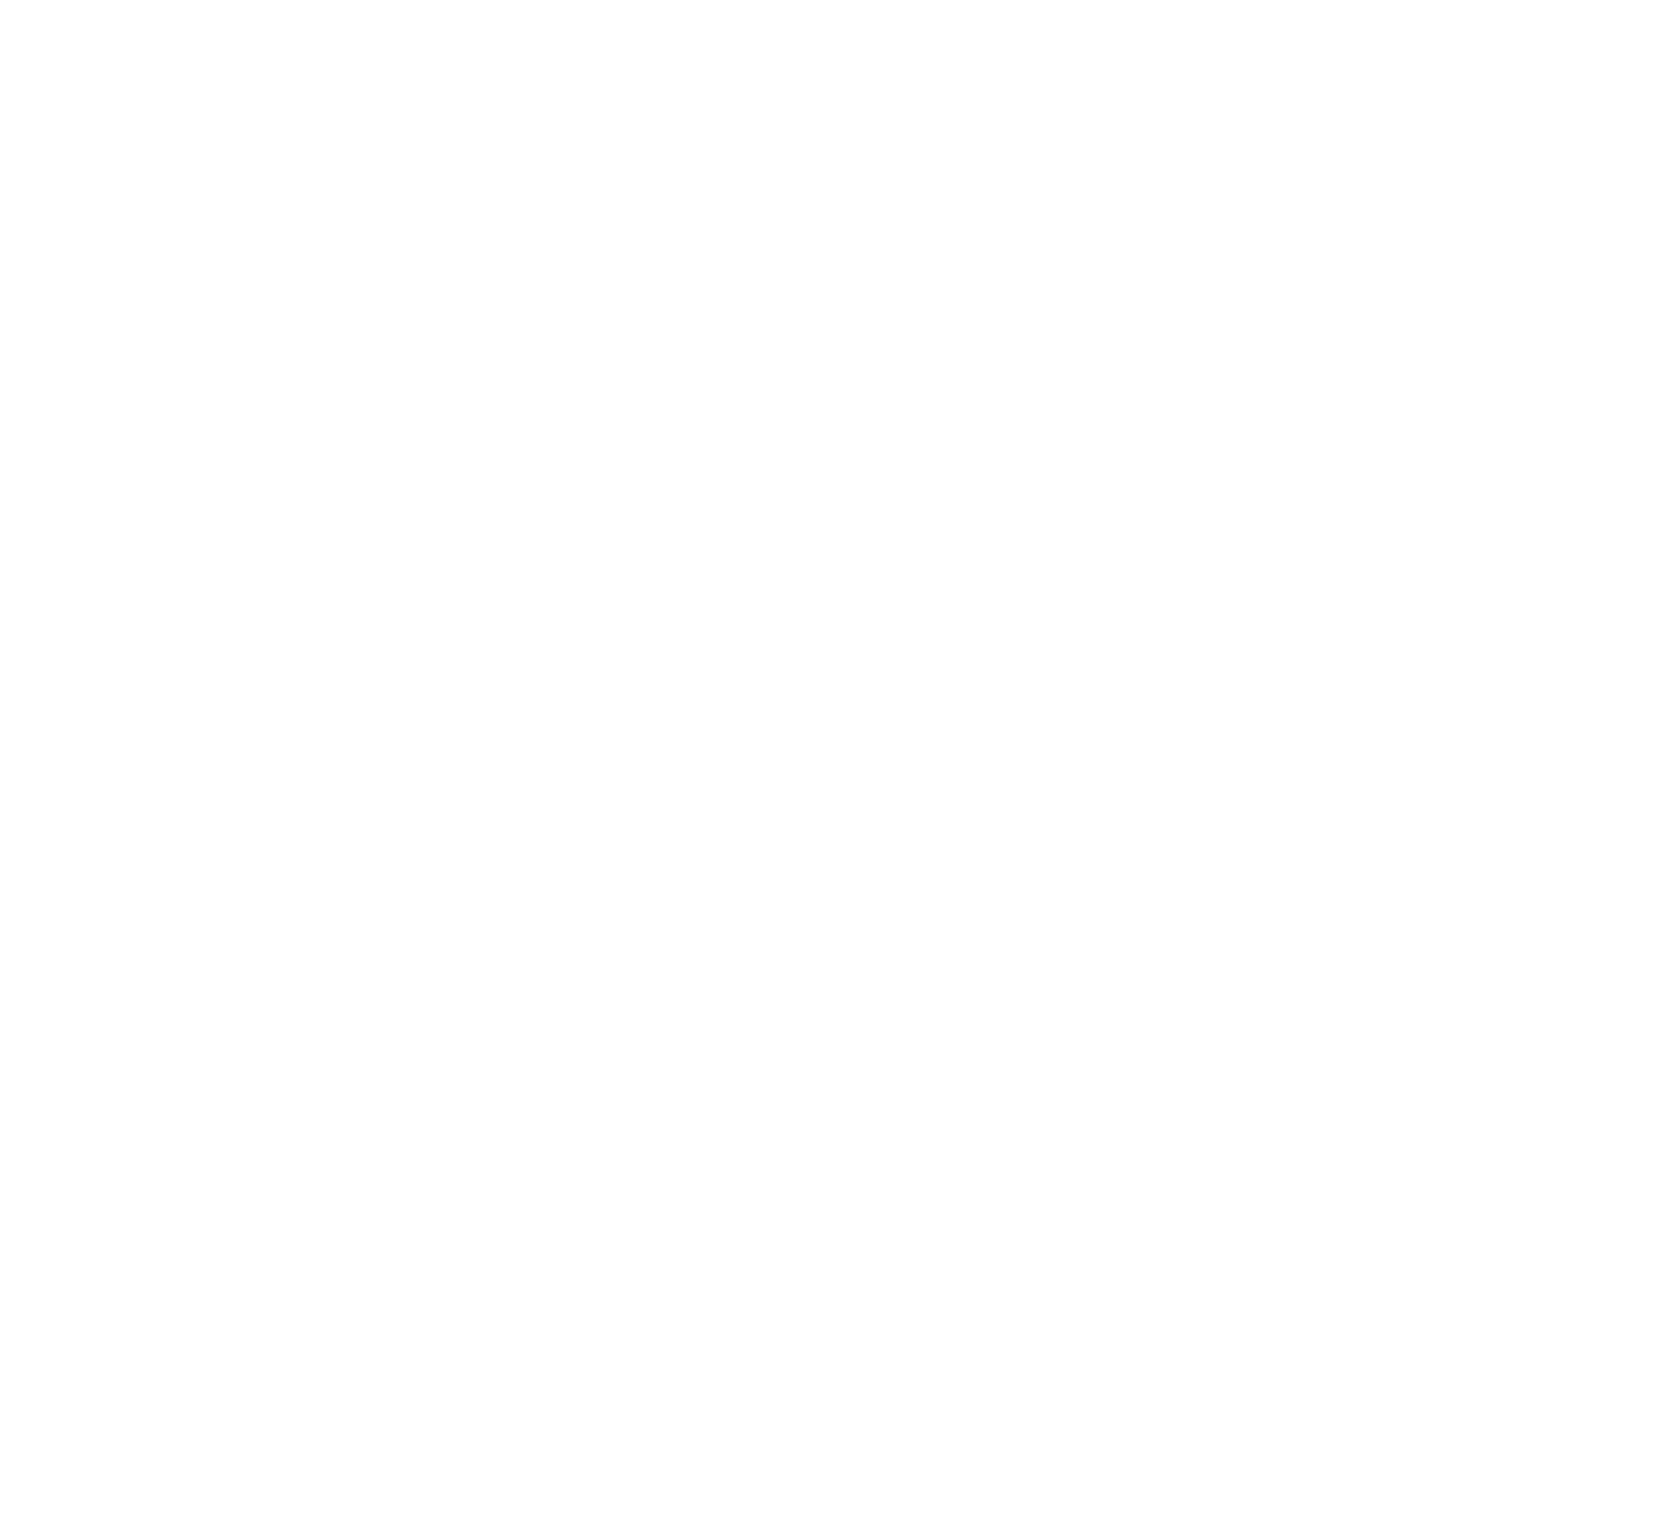 UCHIYAMA CUP